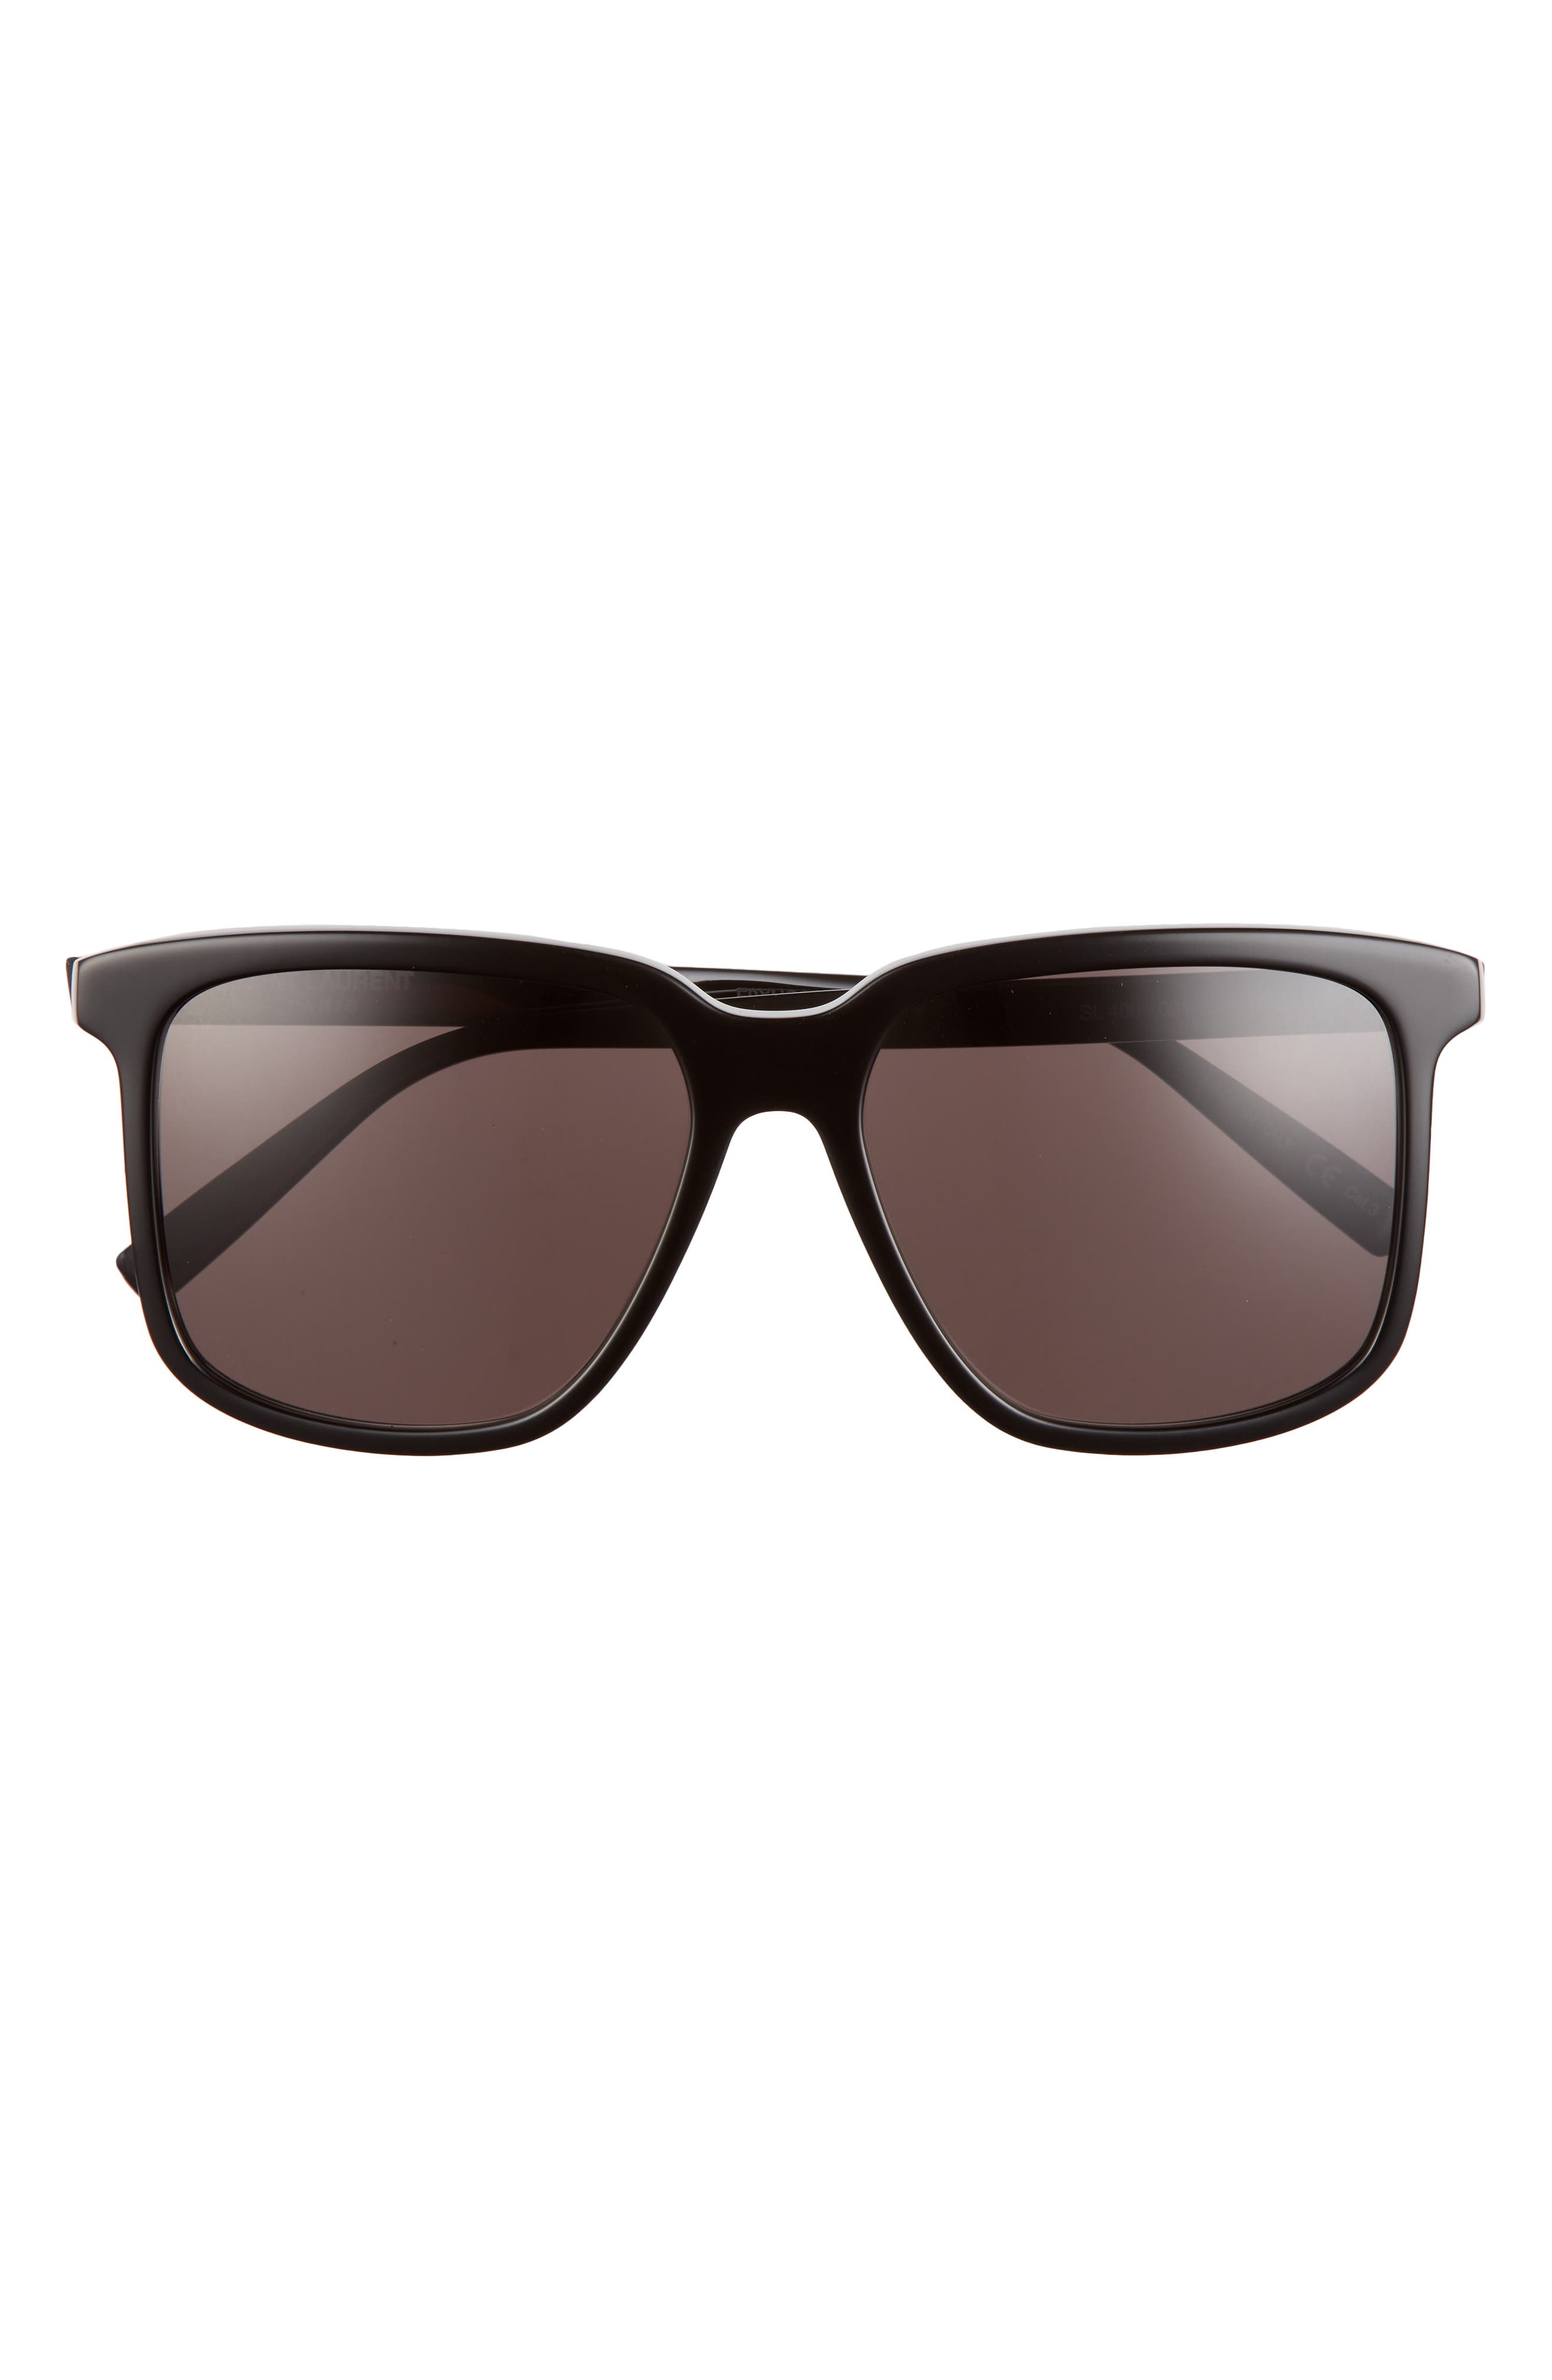 Saint Laurent 56mm Square Sunglasses in Black at Nordstrom